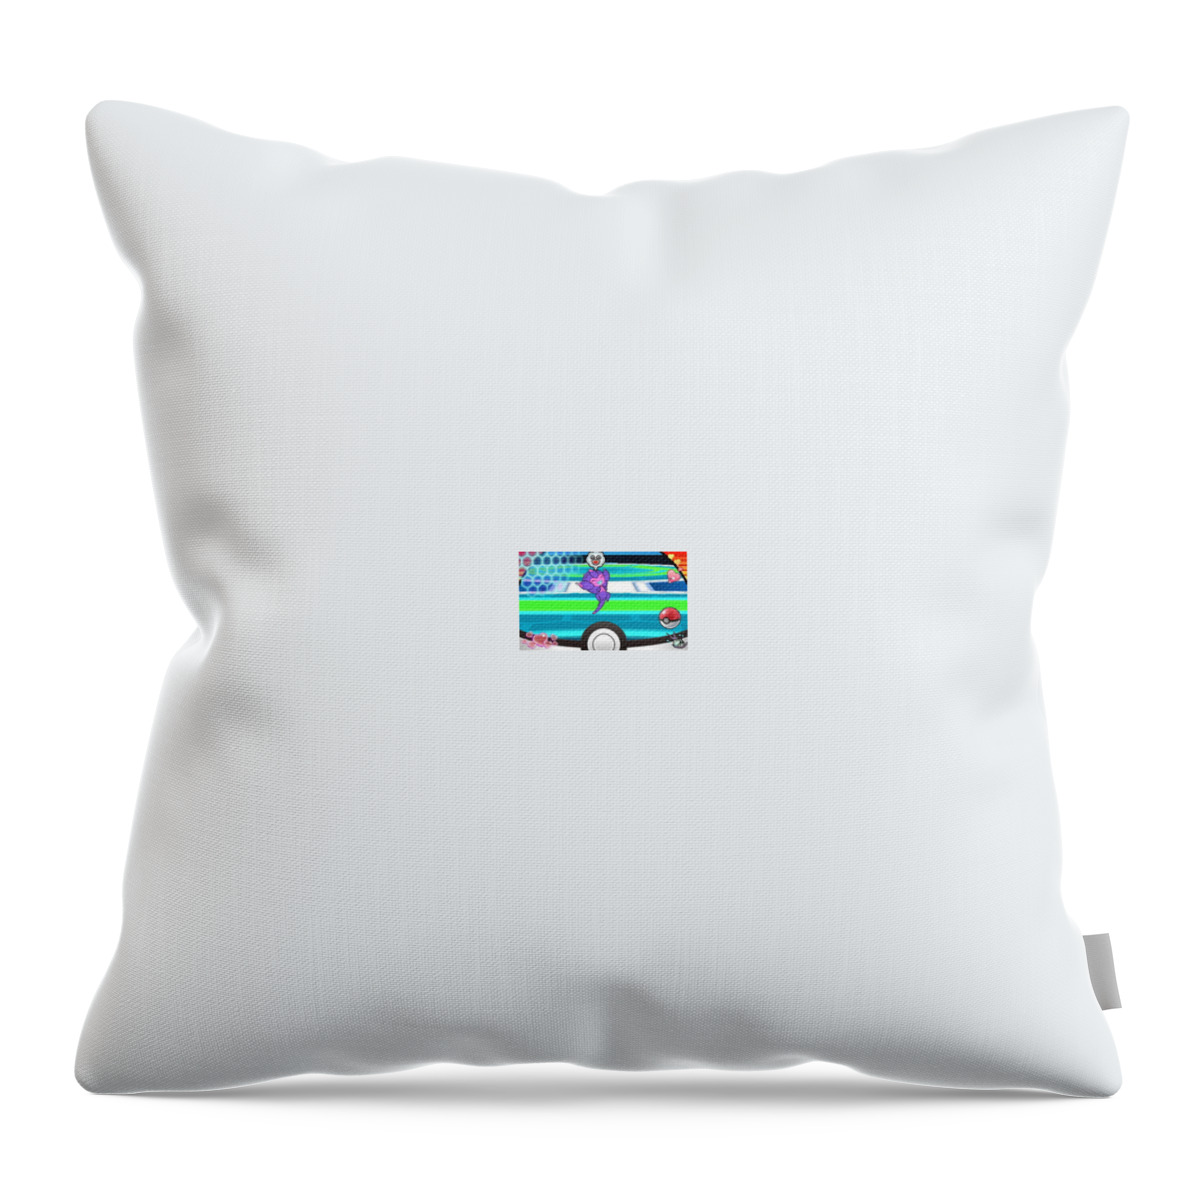 #poipole Throw Pillow featuring the digital art Poipole by Sari Kurazusi